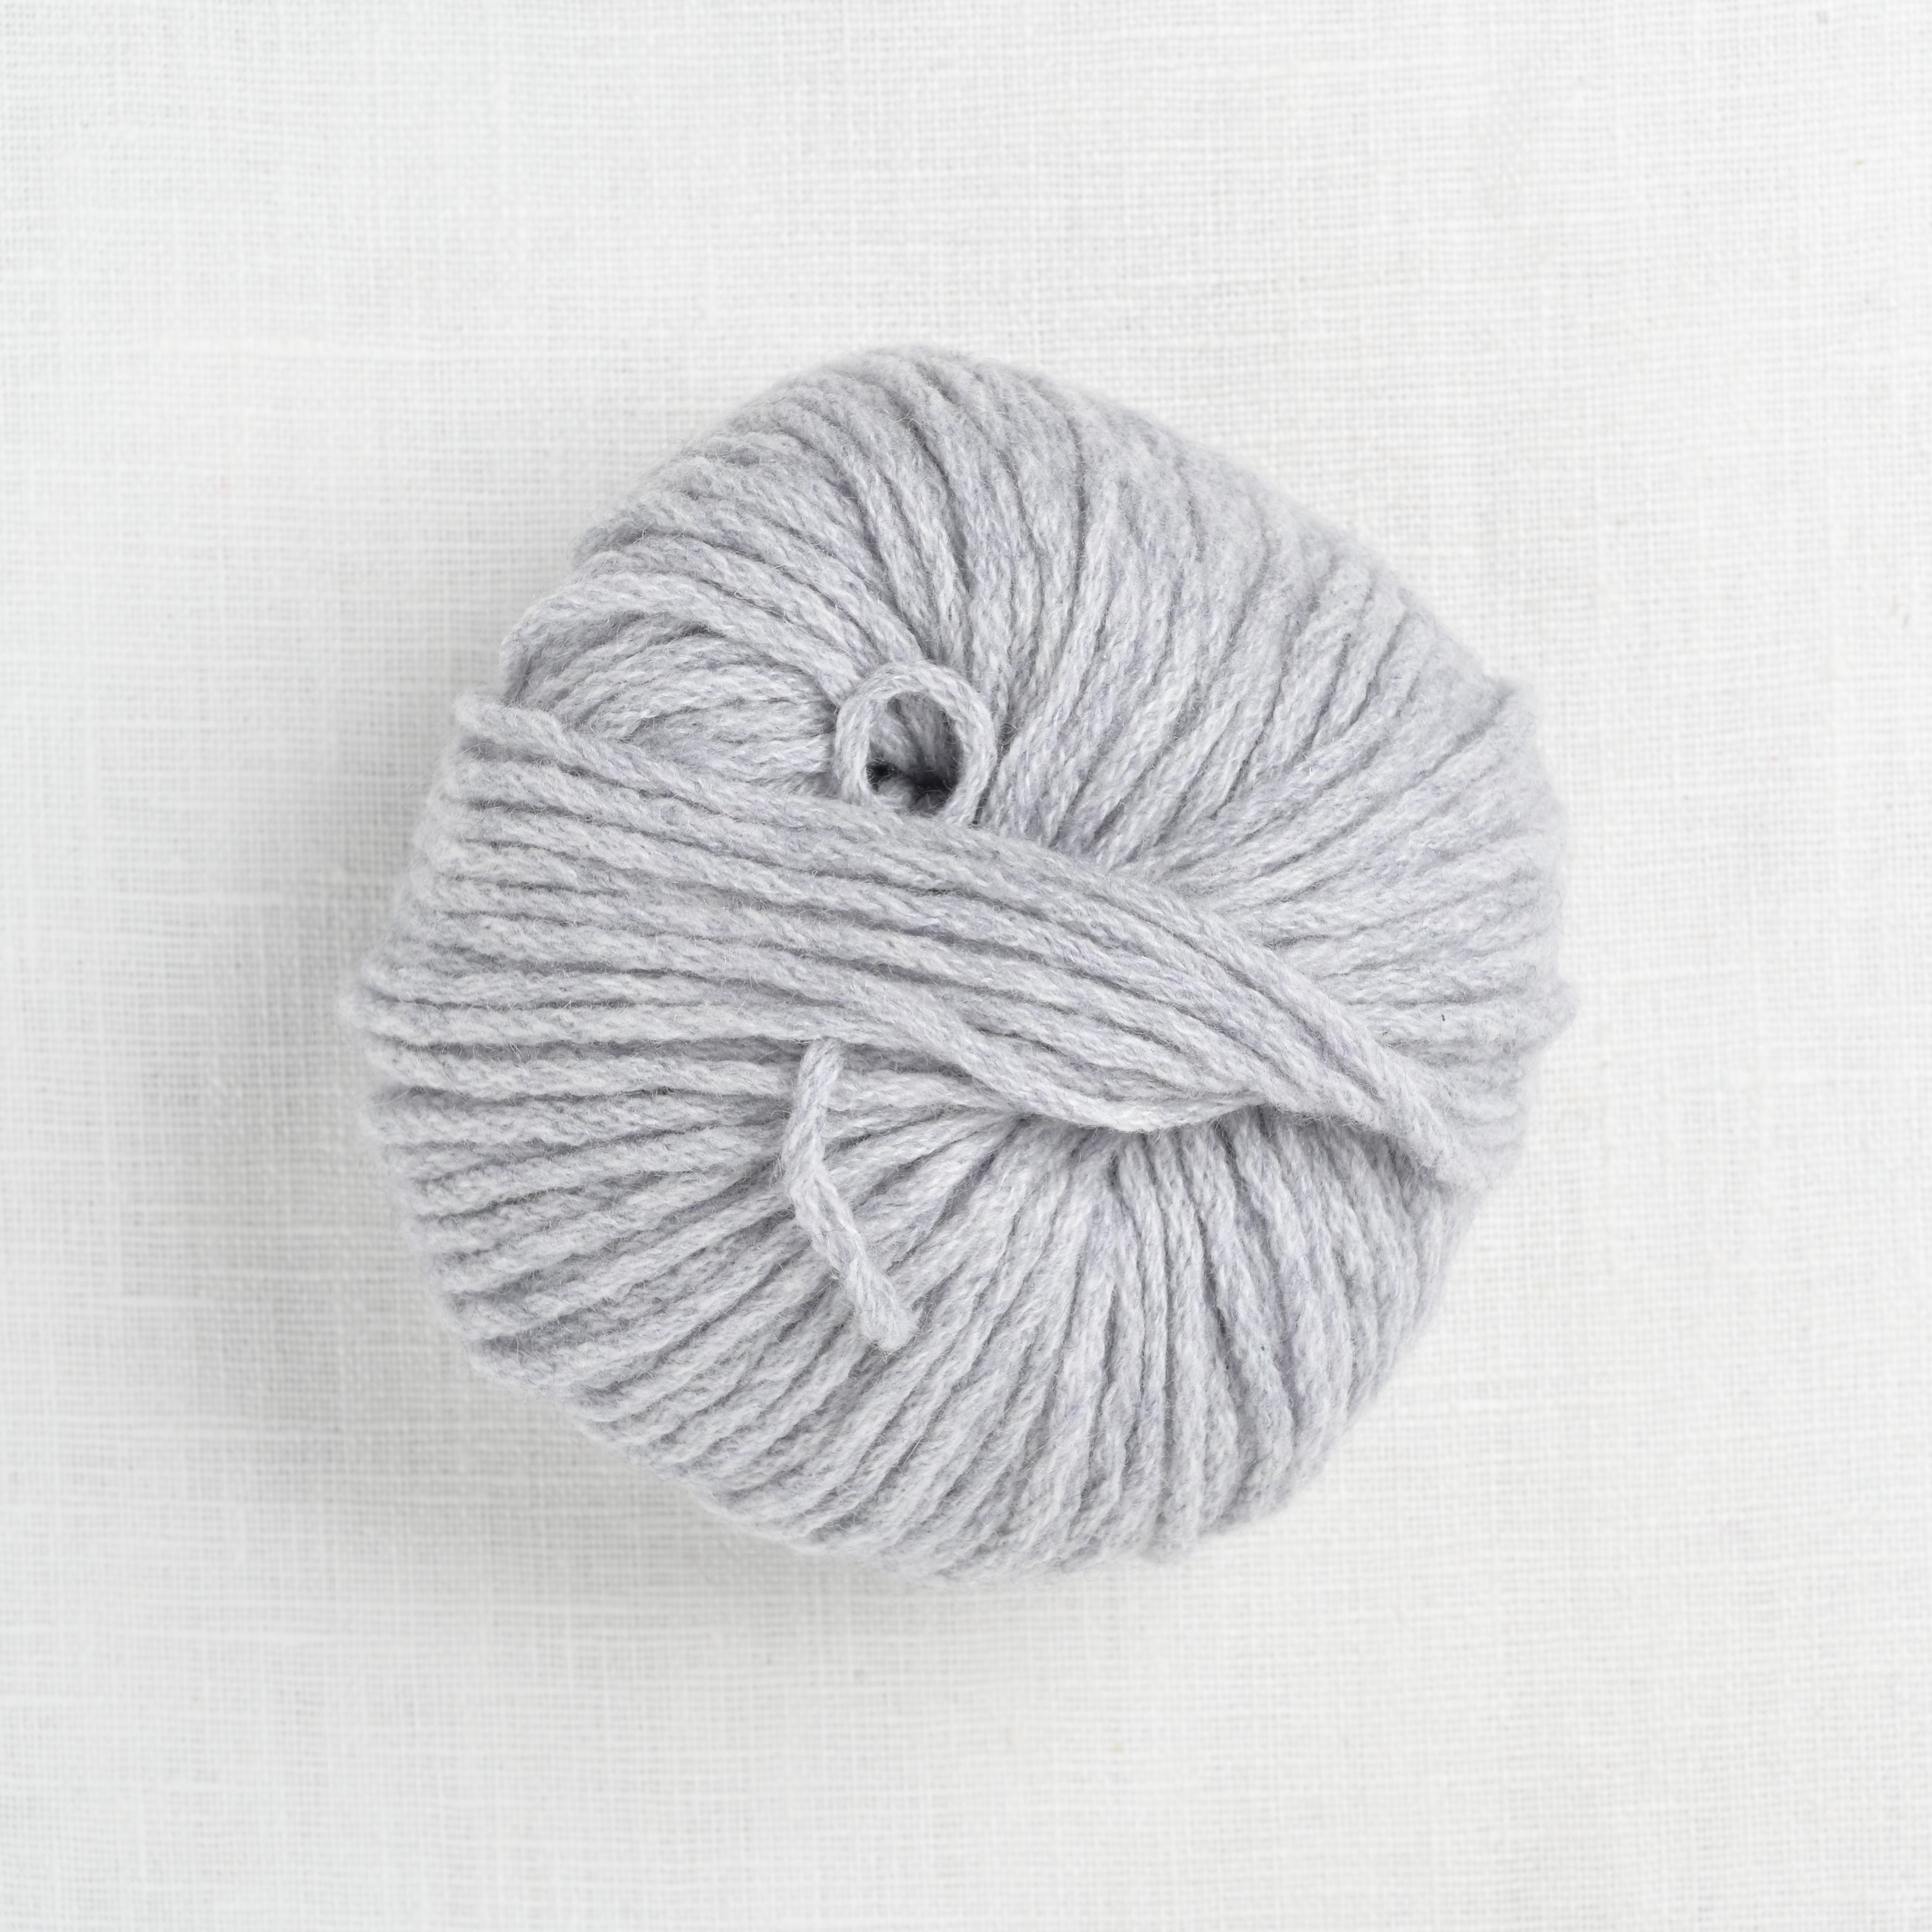 Pascuali Sole Fingering Cotton Cashmere Knitting Yarn – Fillory Yarn